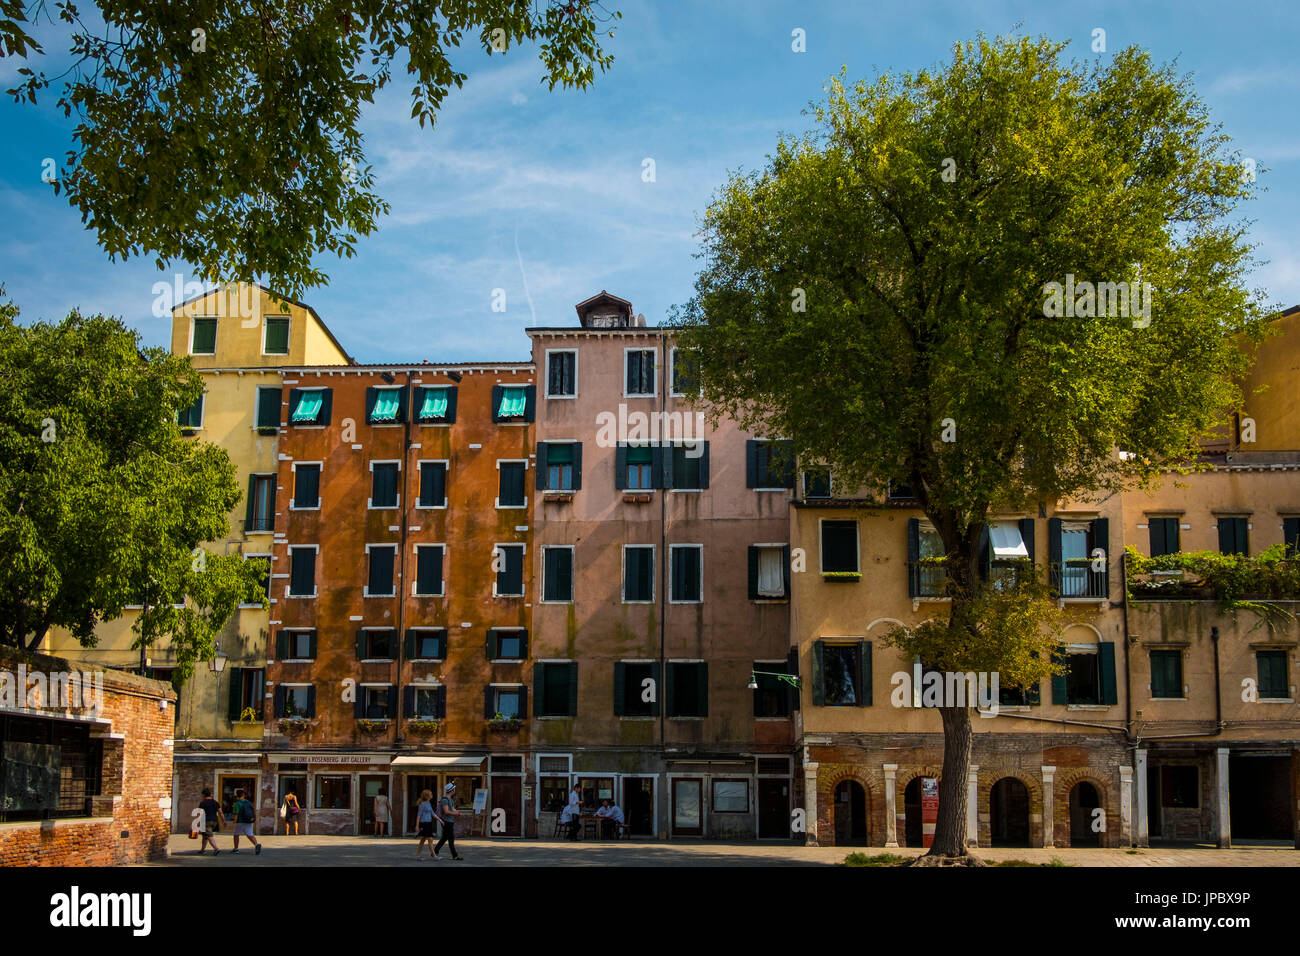 Venedig ghetto -Fotos und -Bildmaterial in hoher Auflösung – Alamy